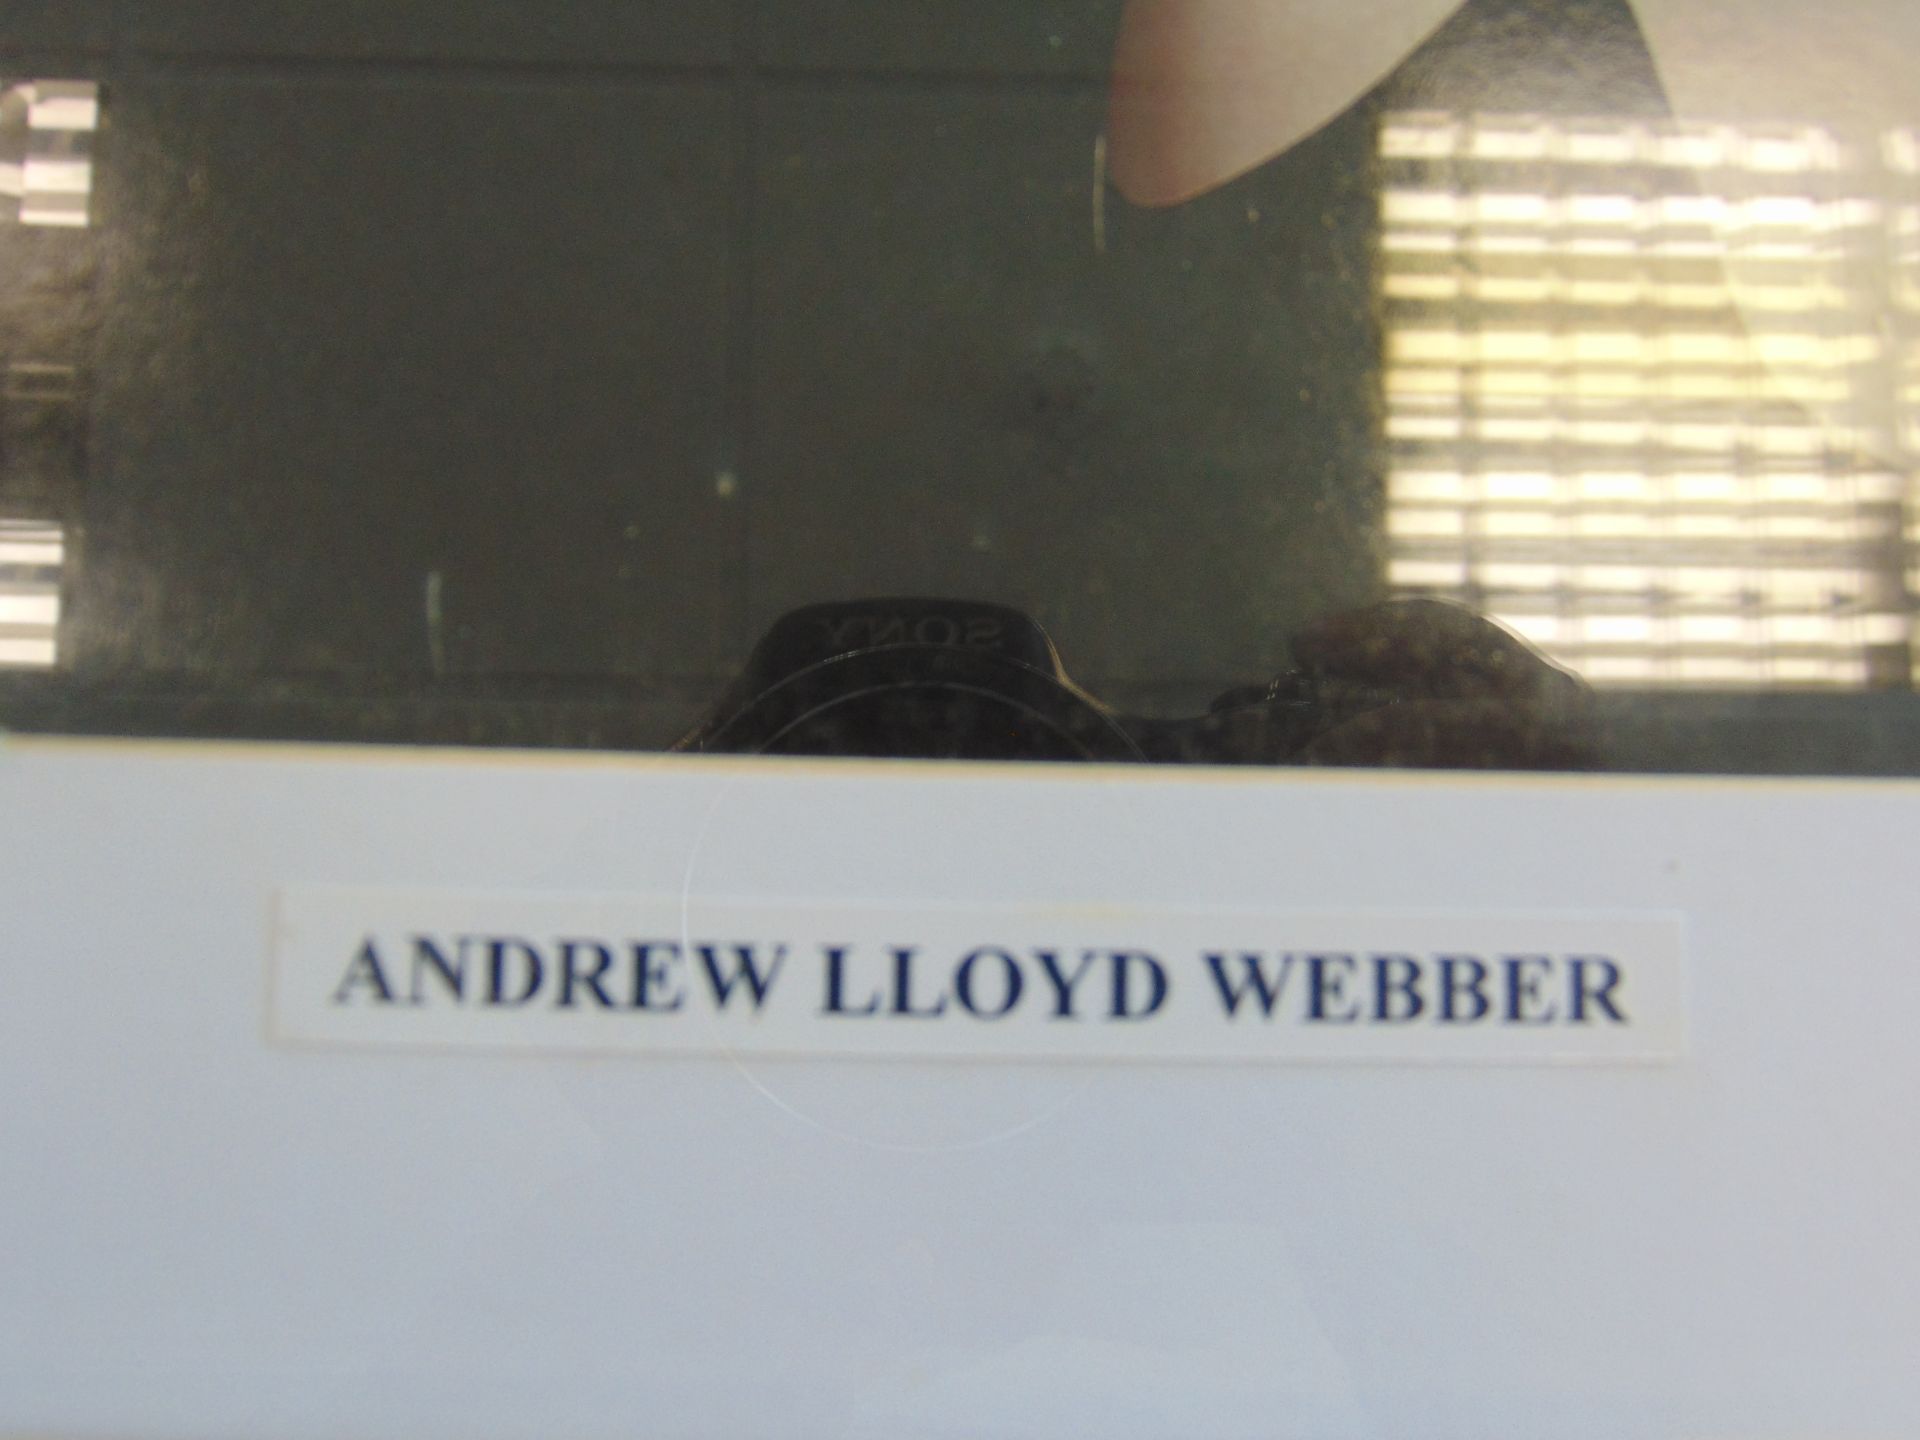 Superb Phantom of the Opera signed by Andrew Lloyd Webber Staring Michael Crawford & Sarah Brightman - Image 4 of 4